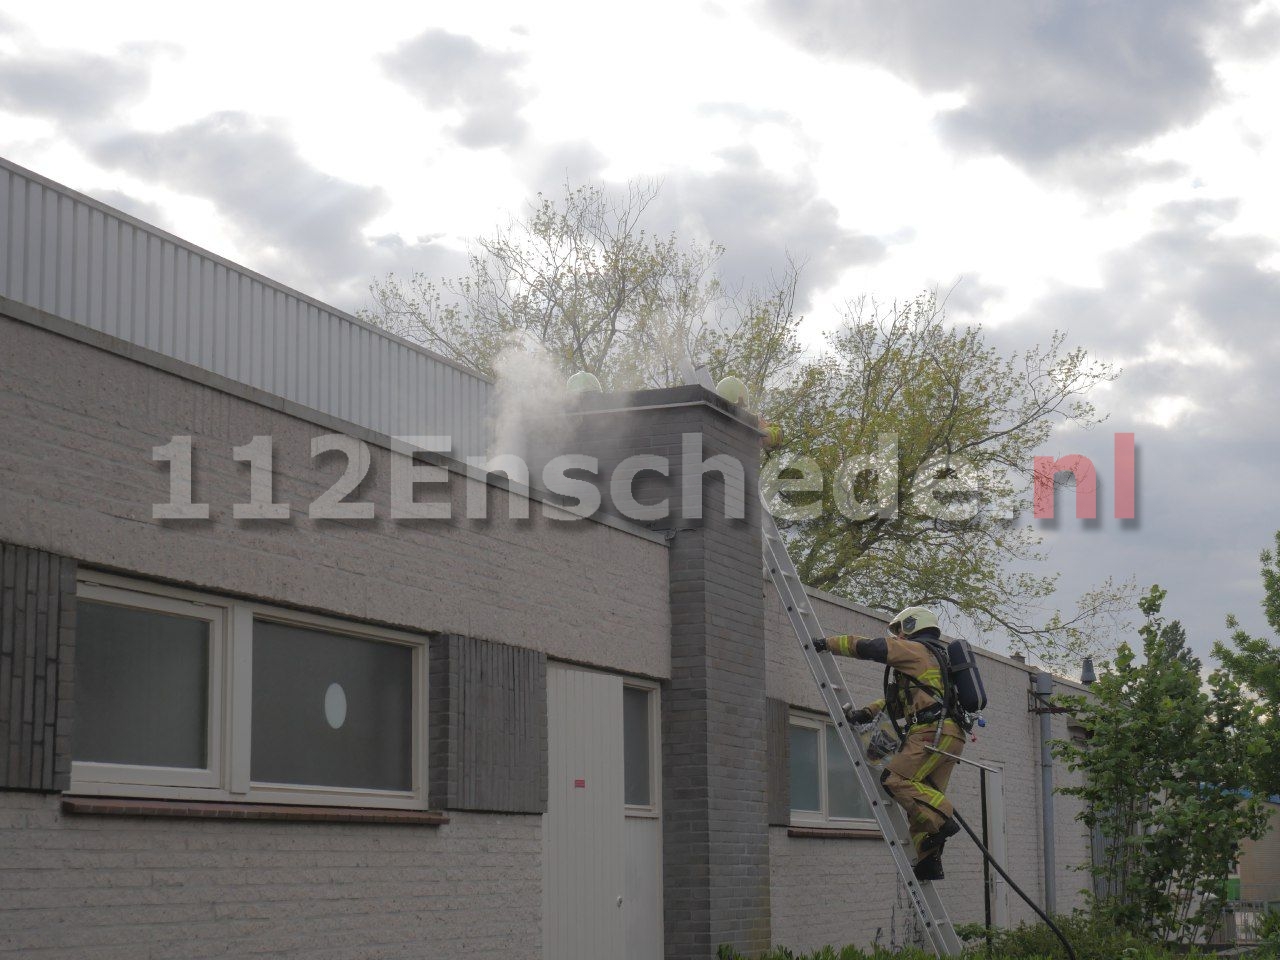 Brandweer blust brand bij sporthal in Enschede